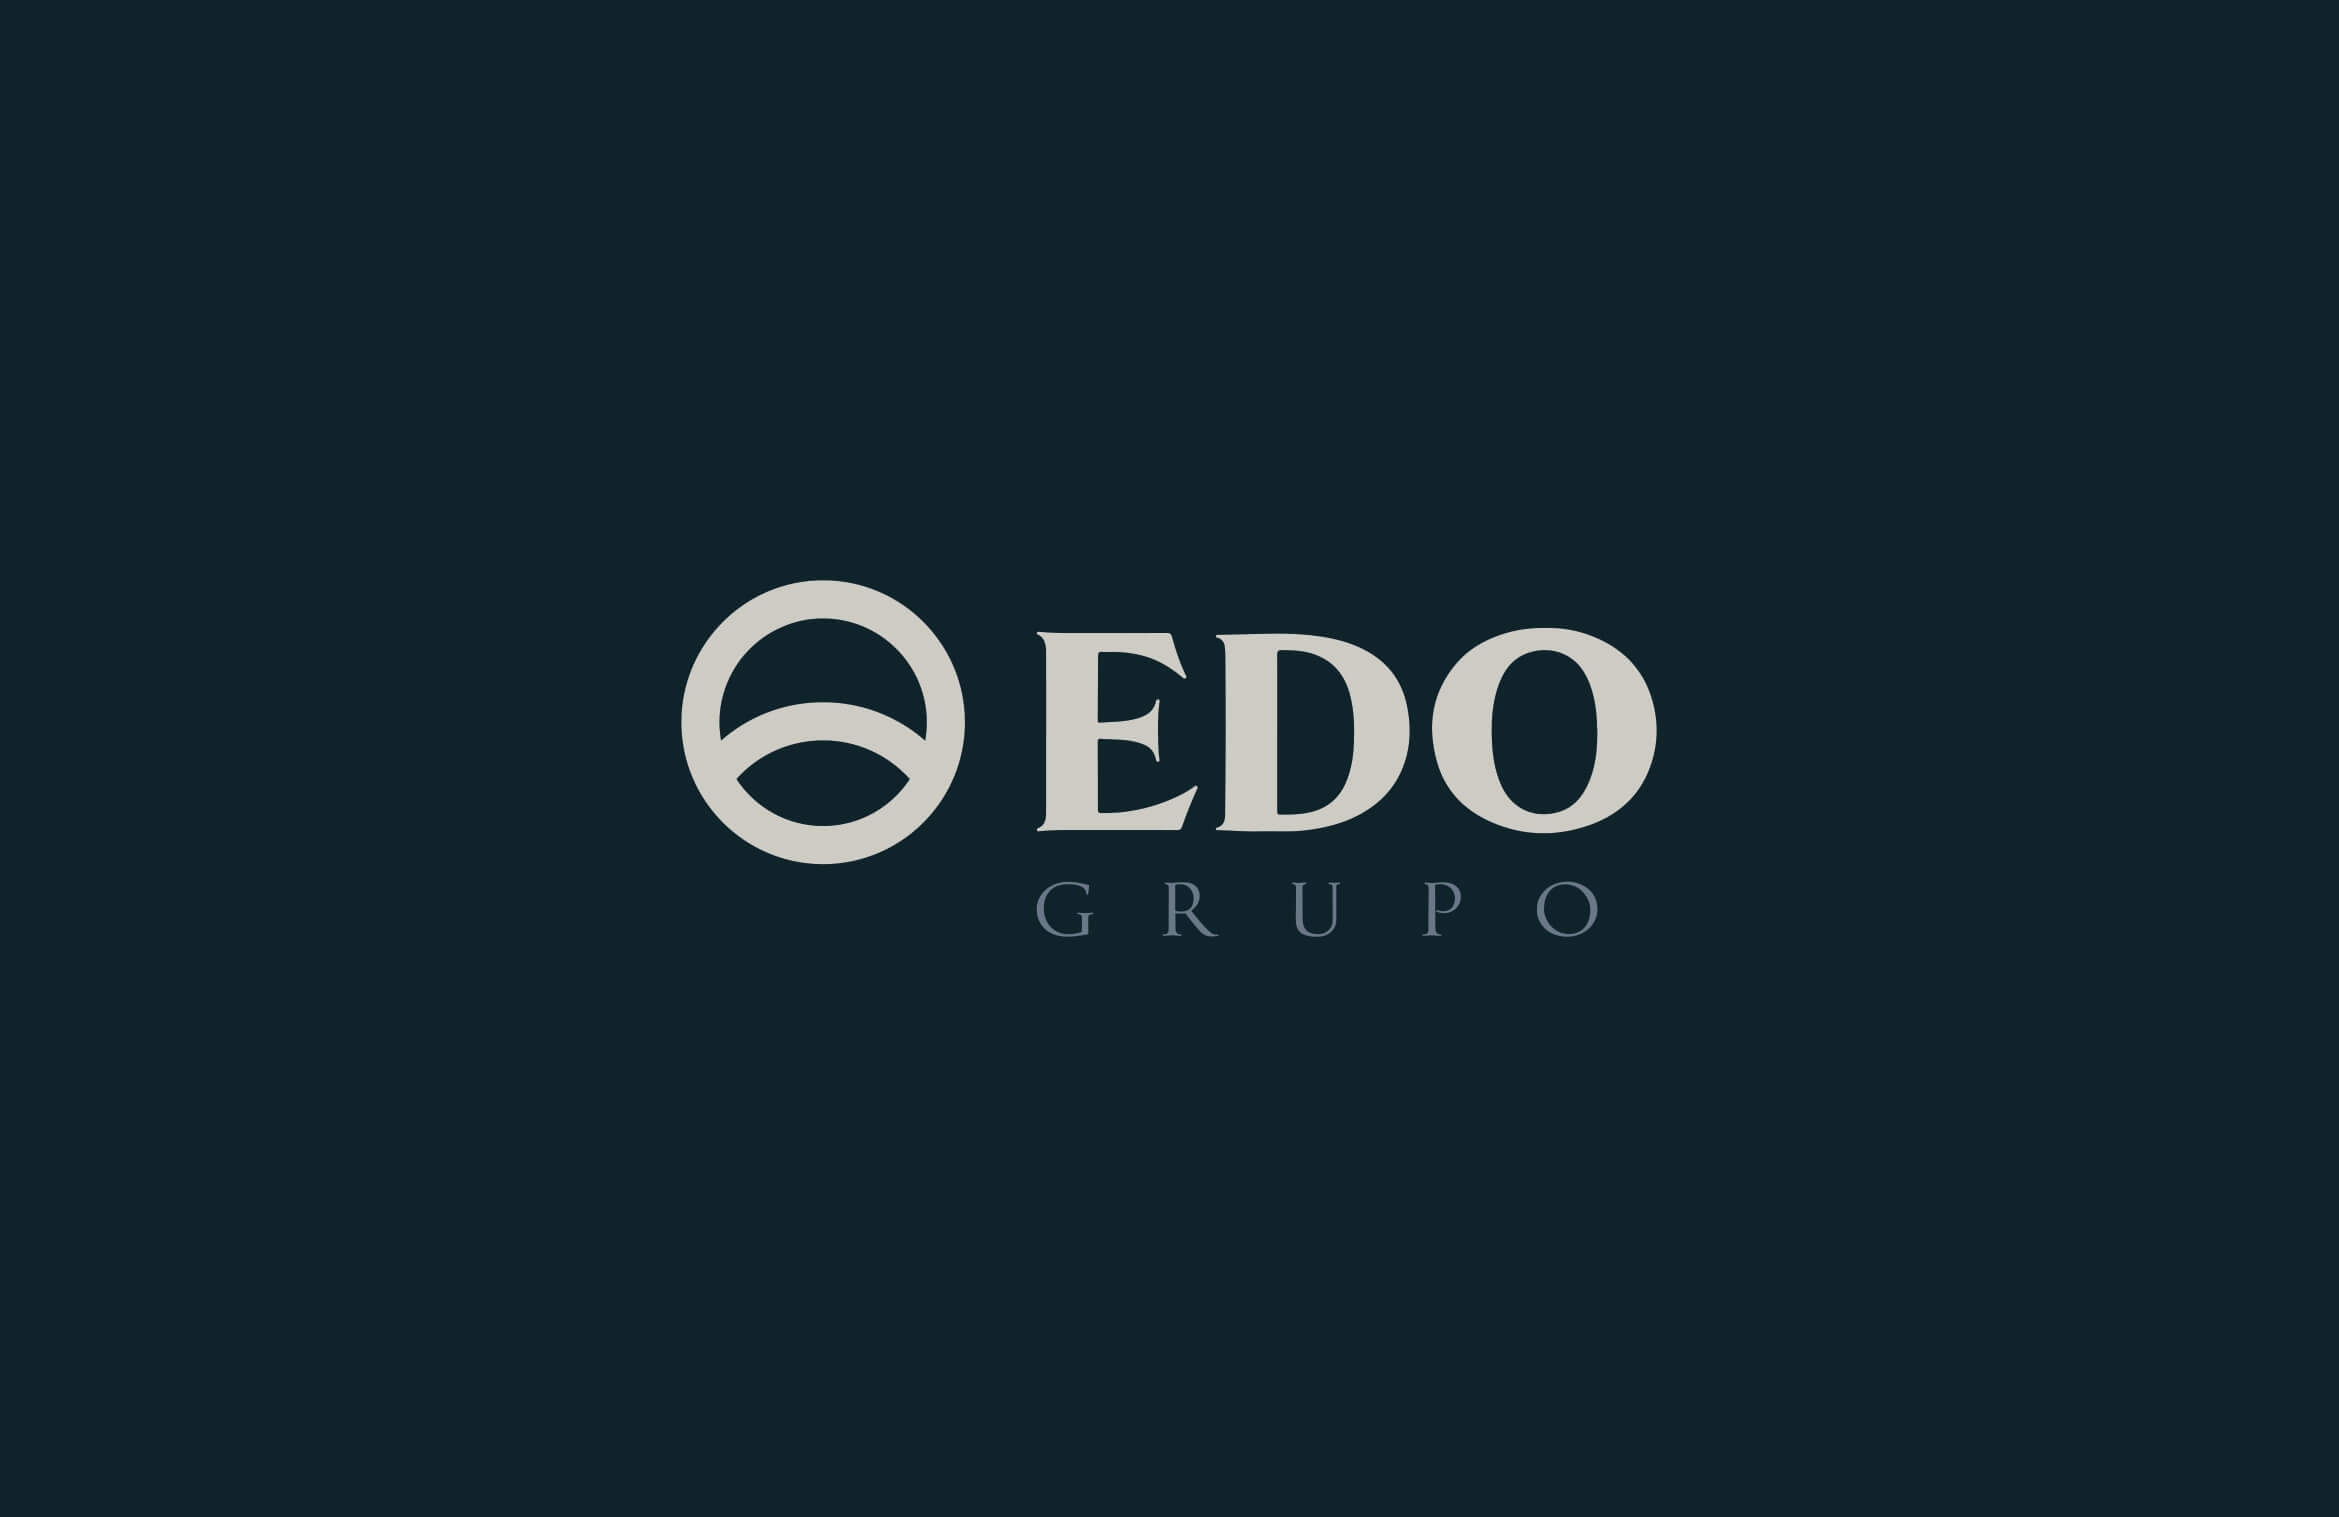 Grupo Edo